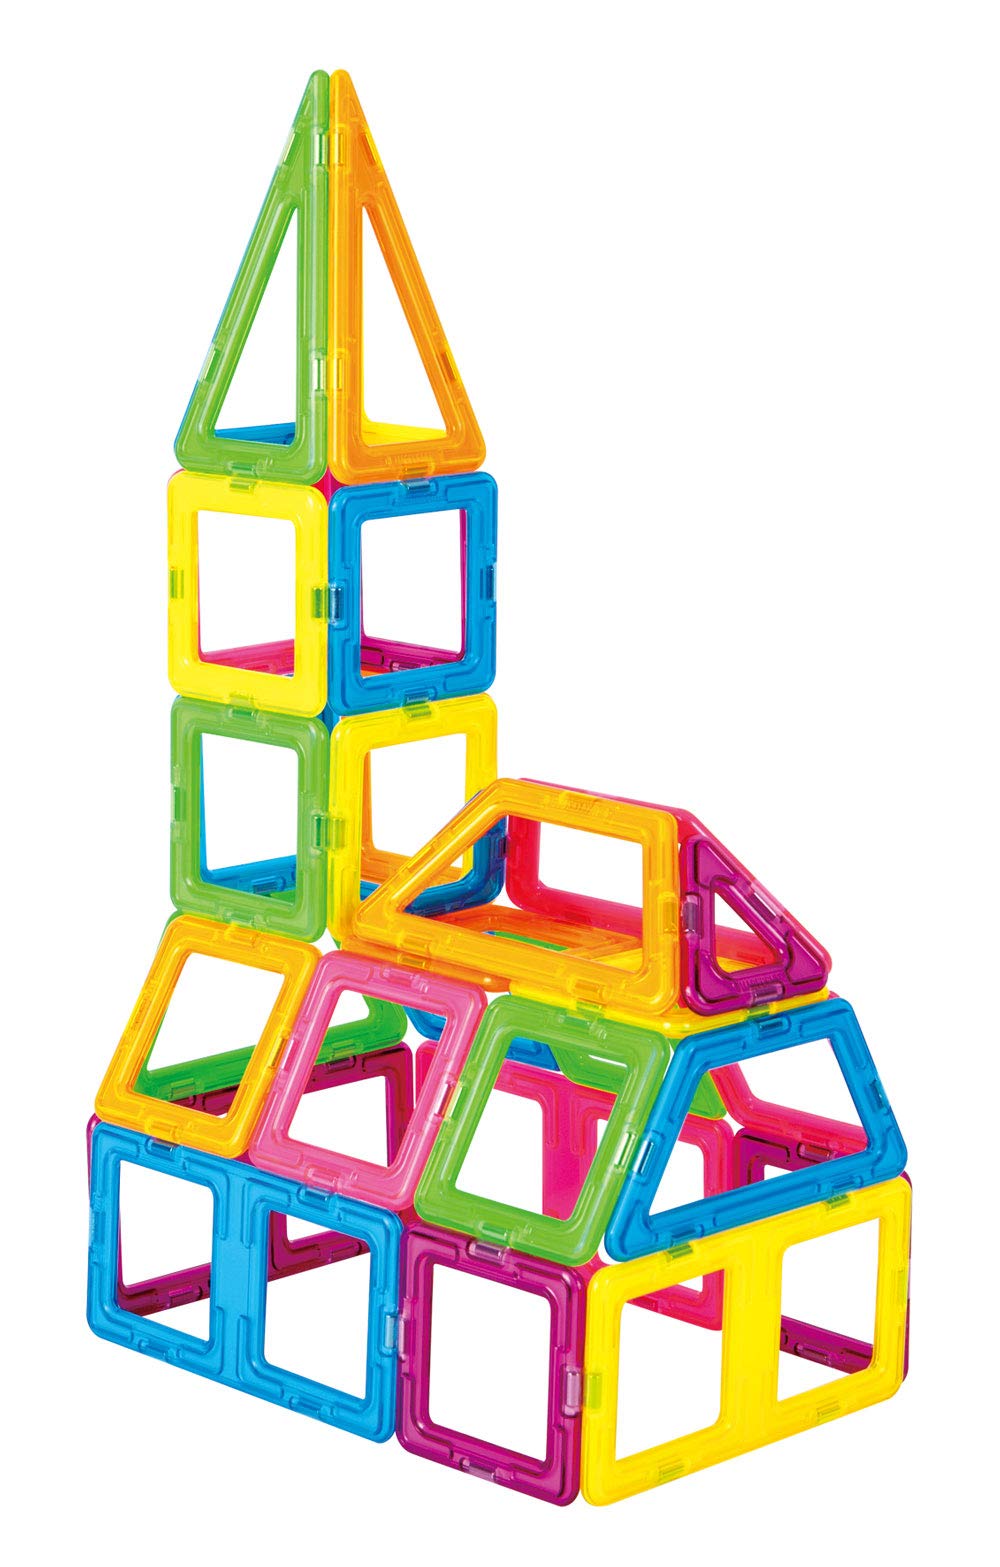 Magformers Creator Neon Color Set (60-pieces) Magnetic Building Blocks, Educational Magnetic Tiles Kit , Magnetic Construction STEM Set